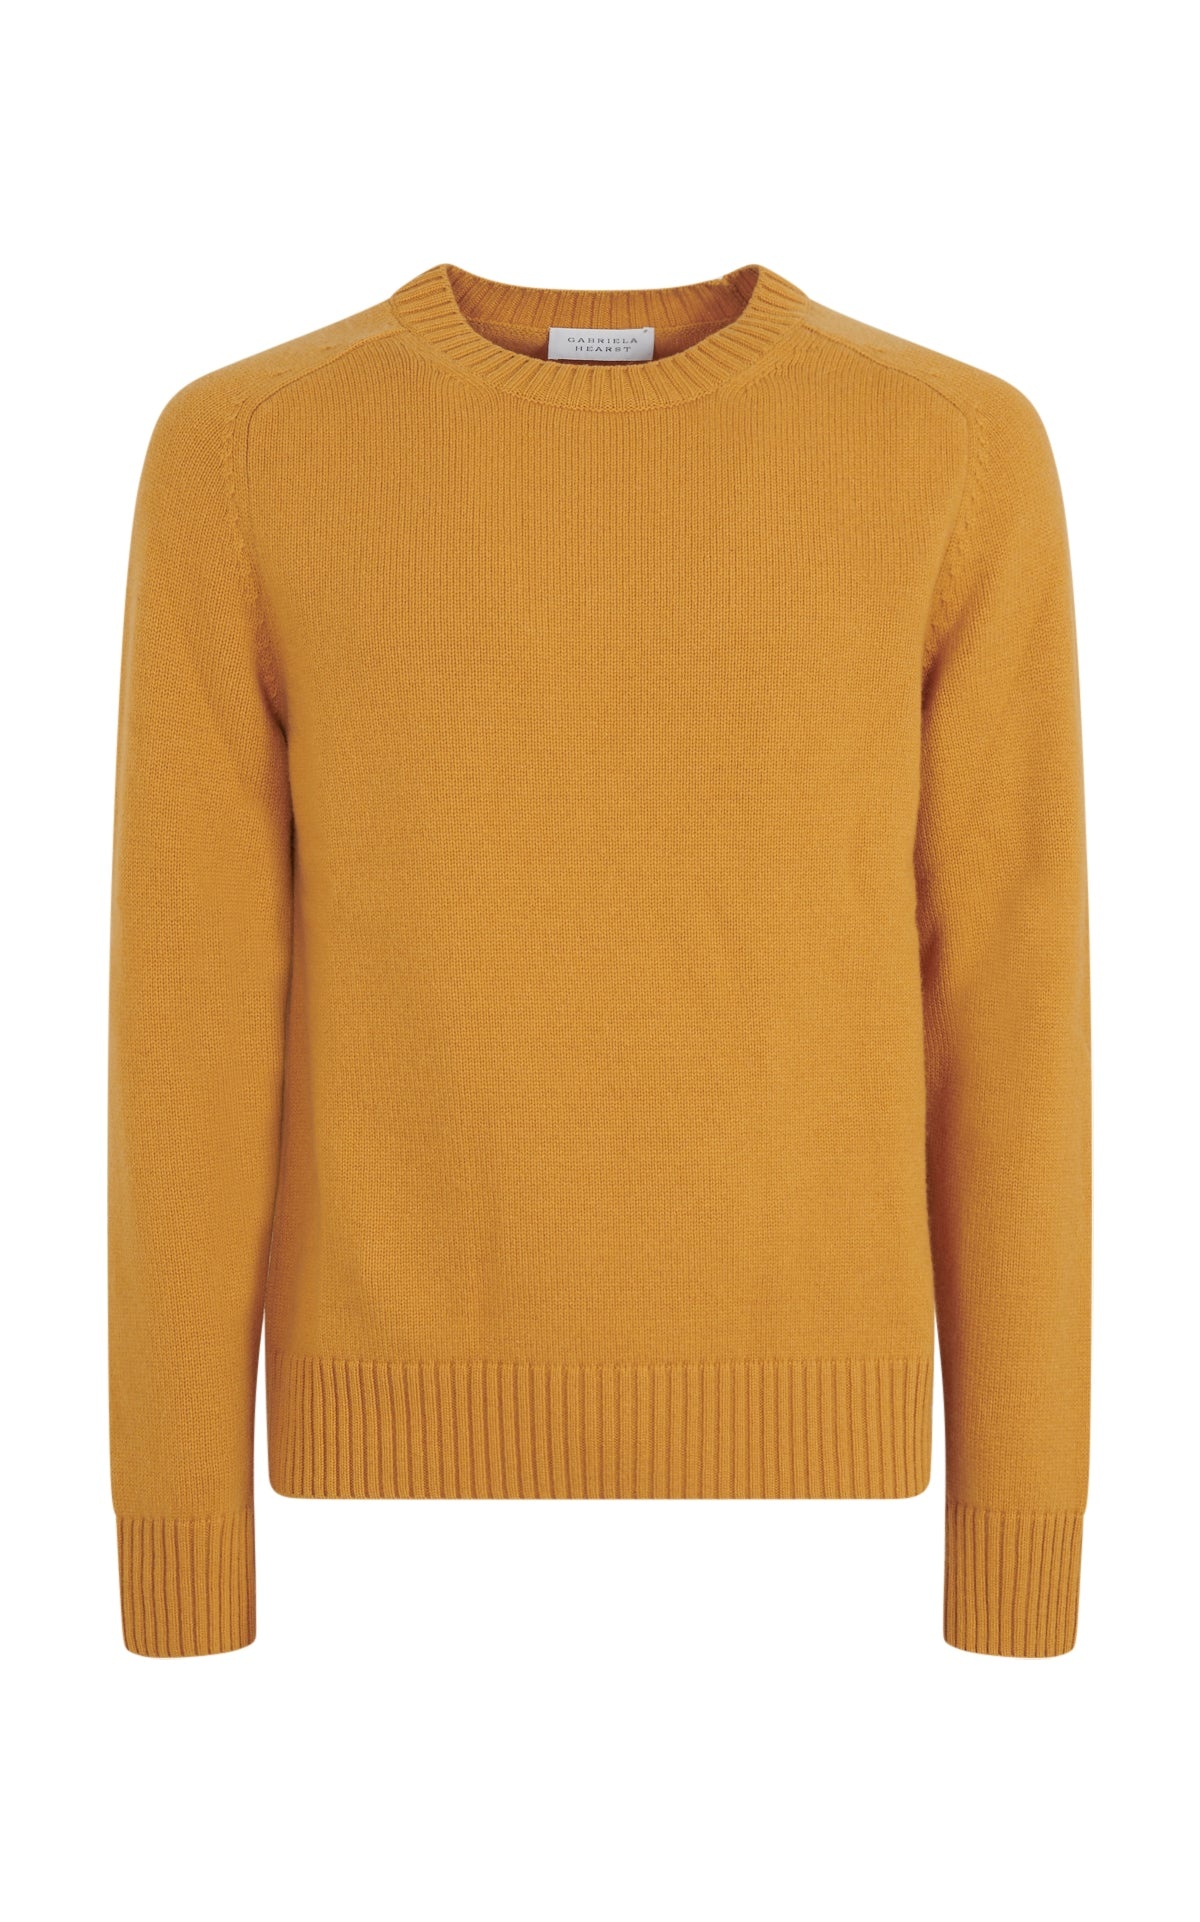 Daniel Knit Sweater in Golden Birch Cashmere - 1